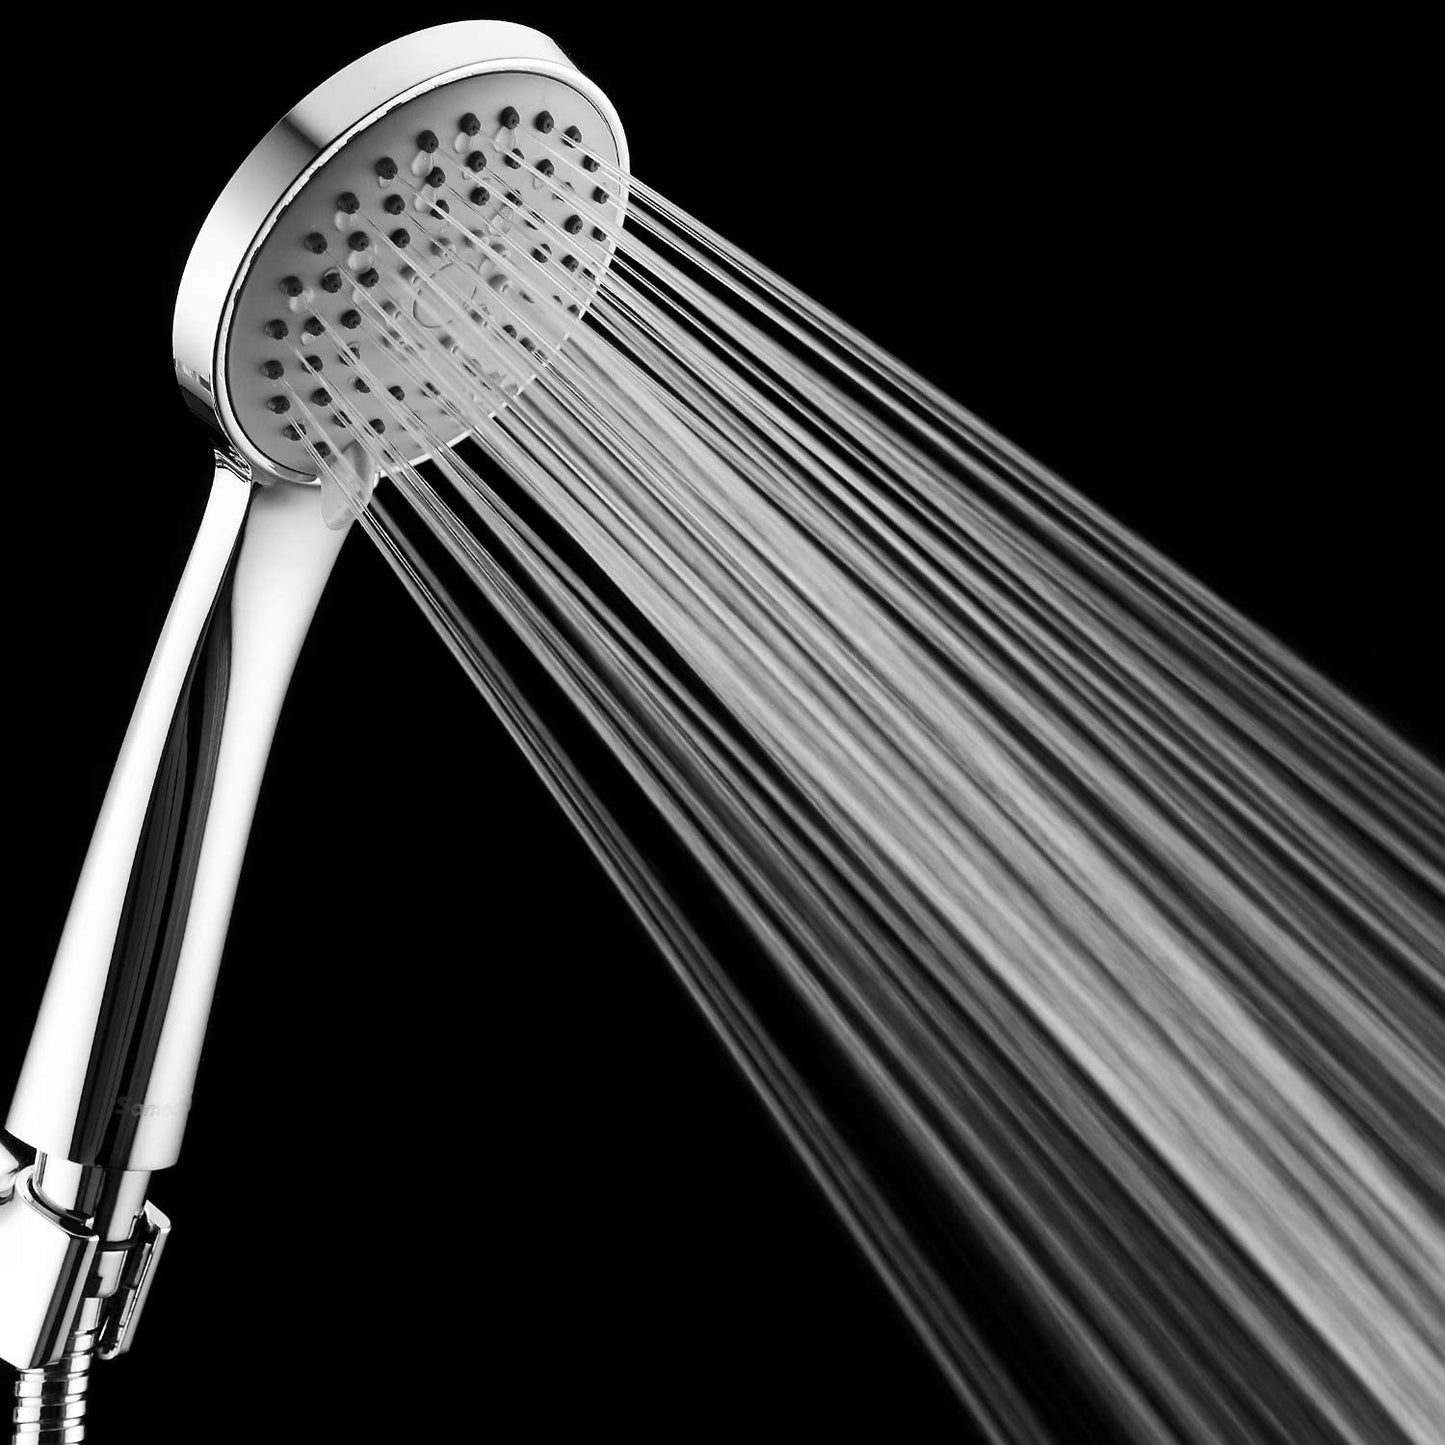 Shower Head, Low Water Pressure Boosting Handheld Shower Head High Pressure Water Saving 3 Powerful Spray Settings for Bathroom – Chrome